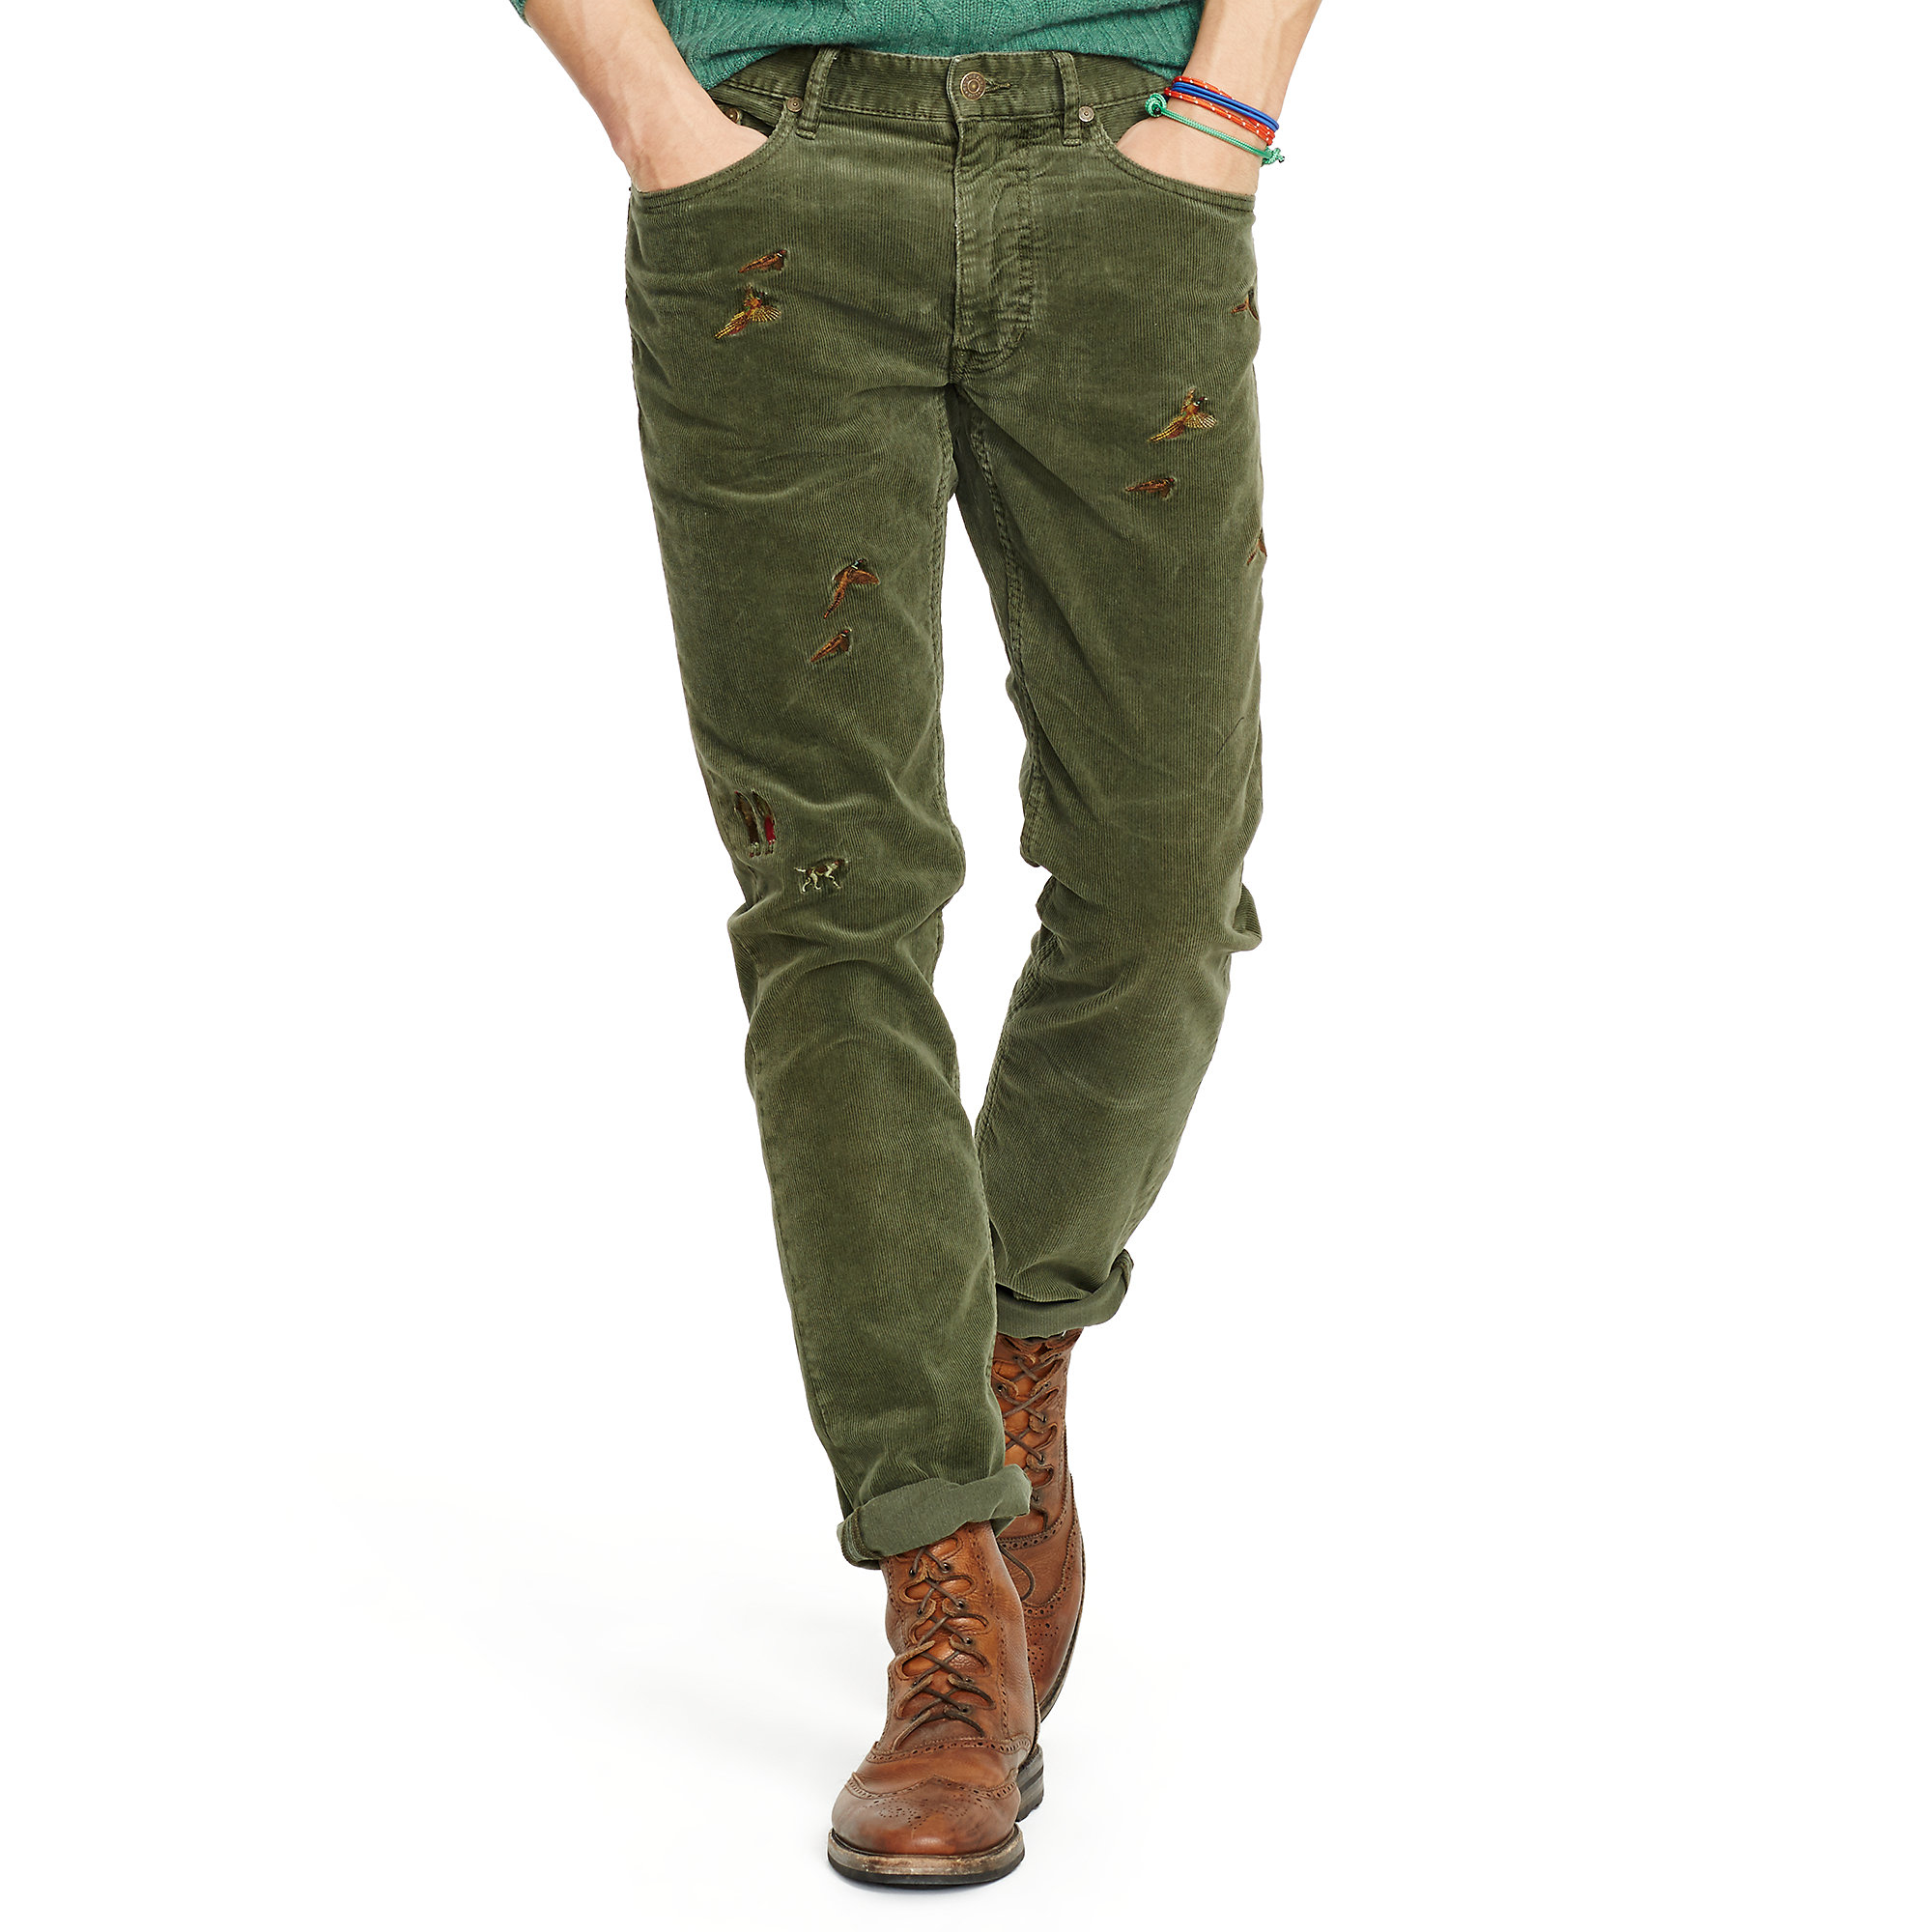 Lyst - Polo Ralph Lauren Sullivan Slim Corduroy Pant in Green for Men